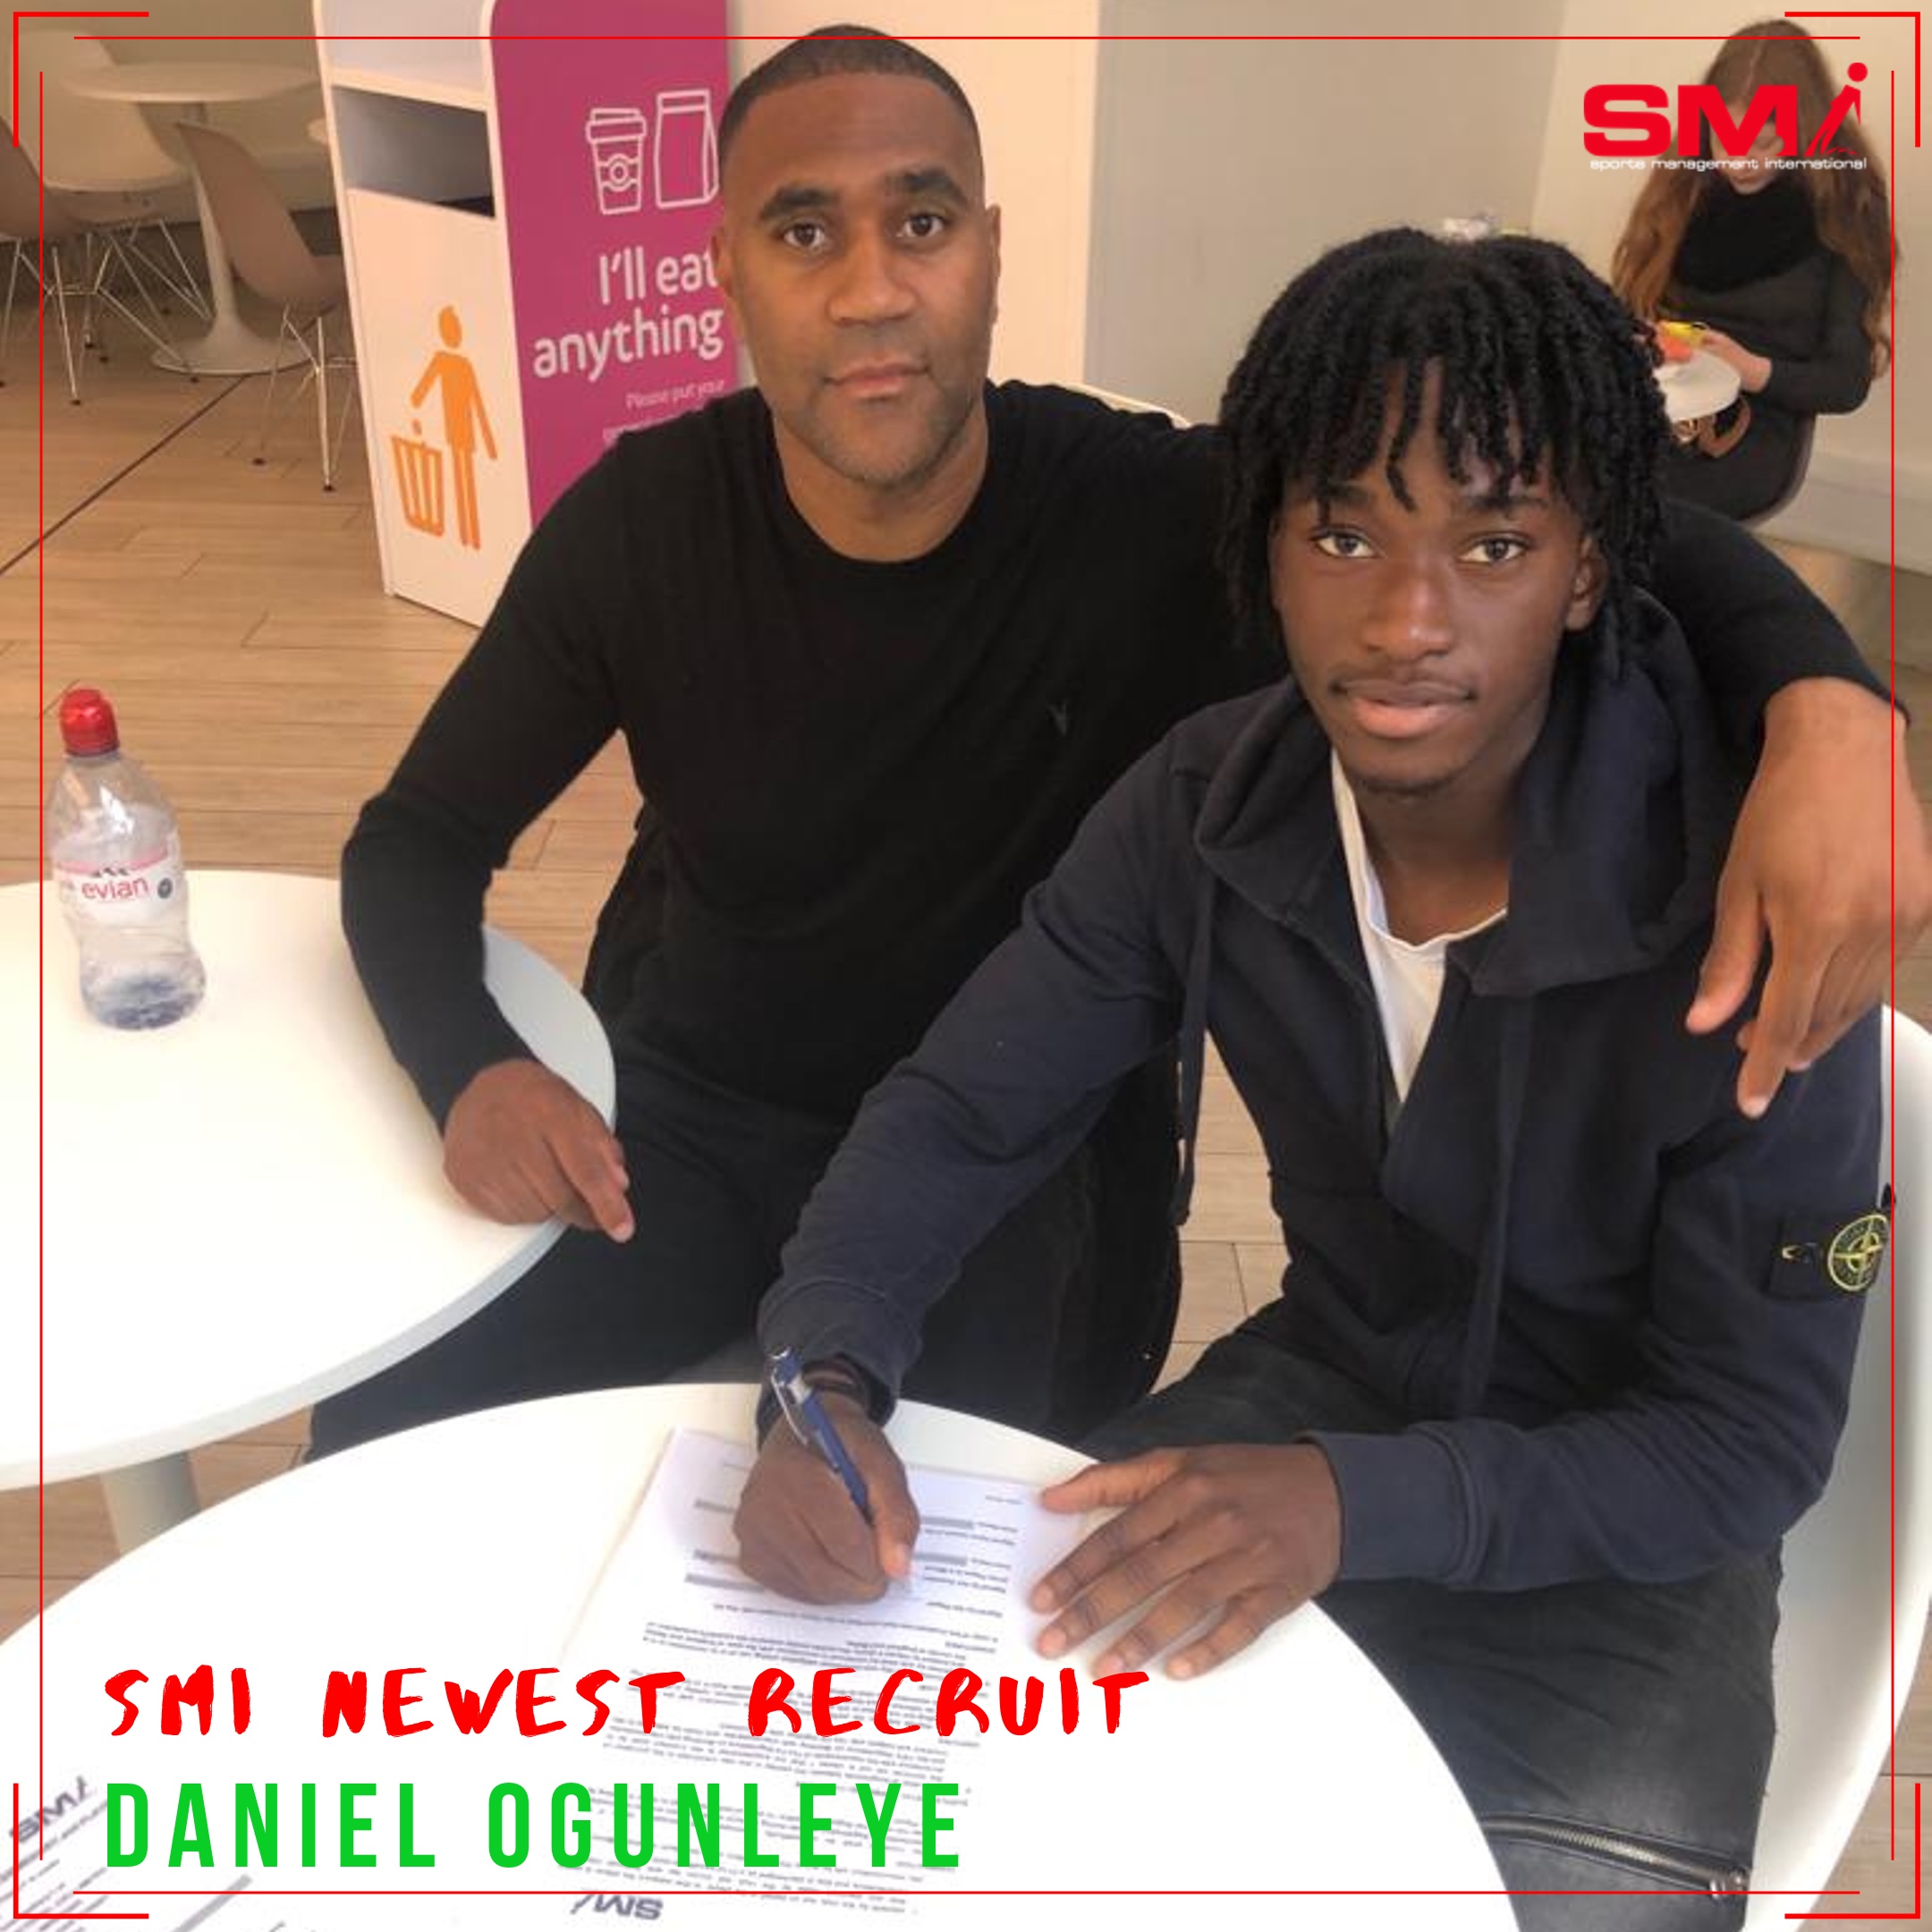 SMI New Recruit Daniel Ogunleye